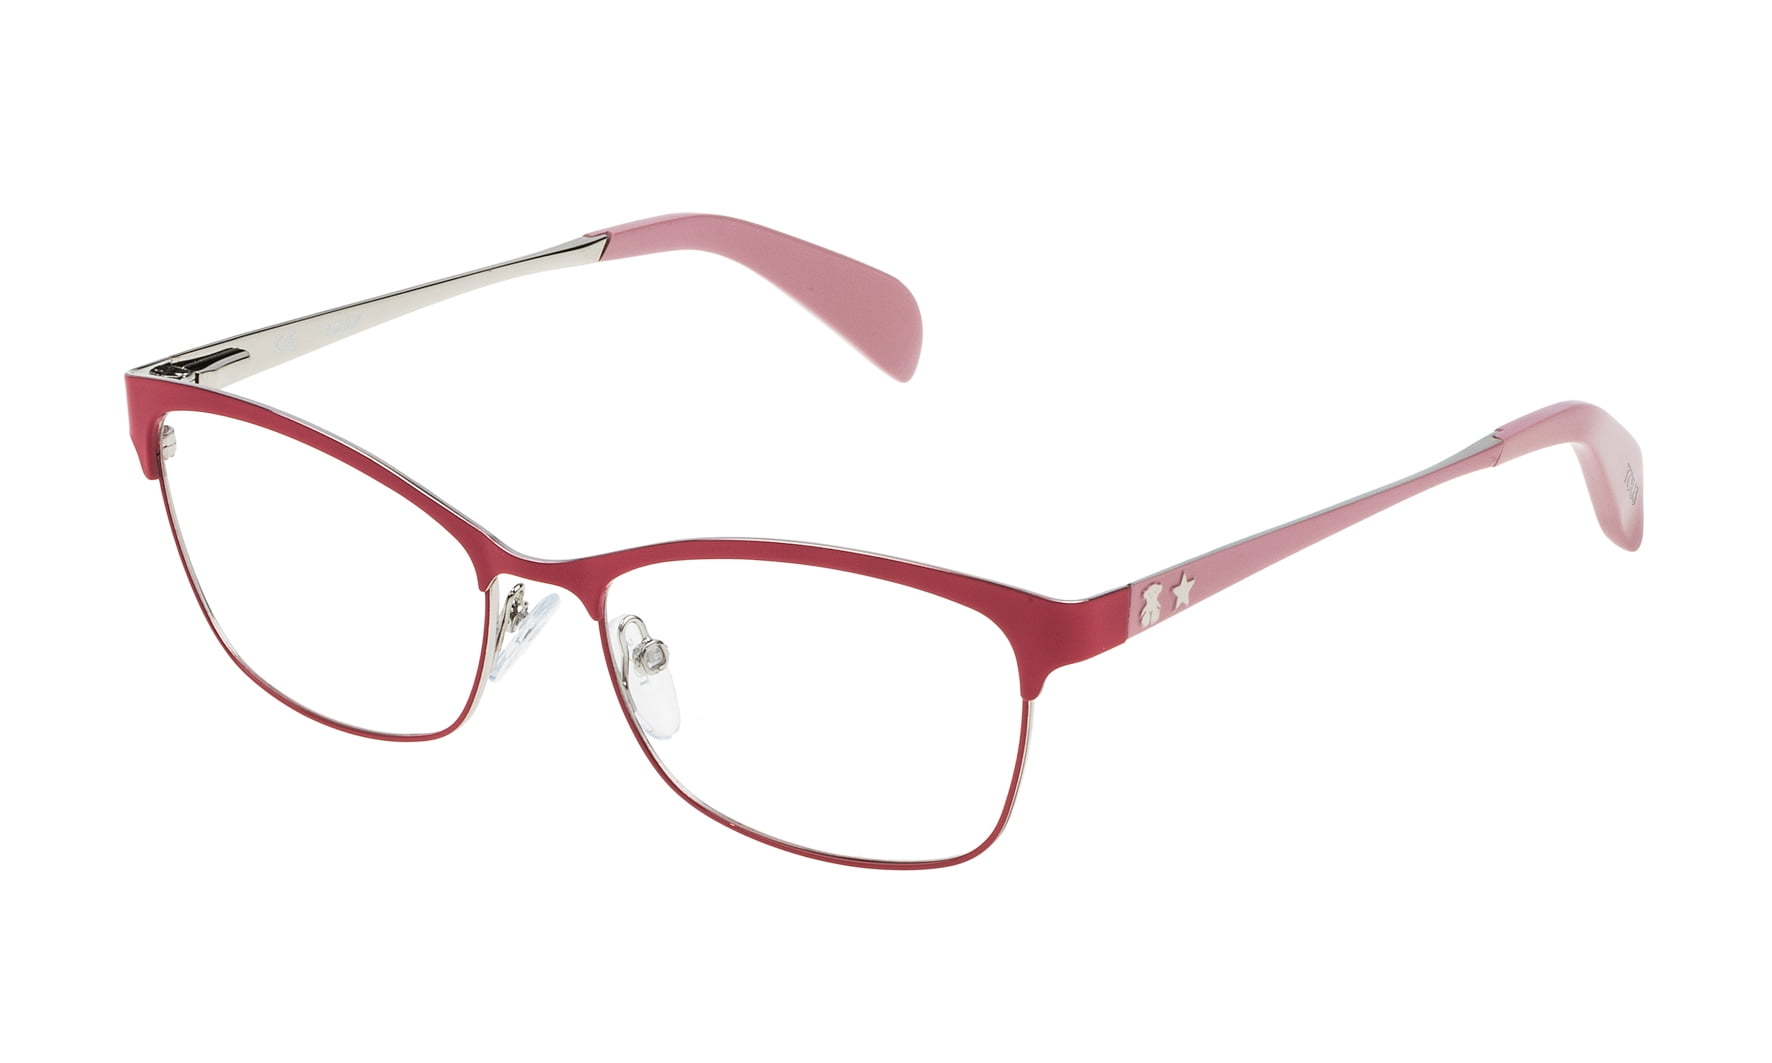 Discountglasses Com: Order Low-priced Glasses Online